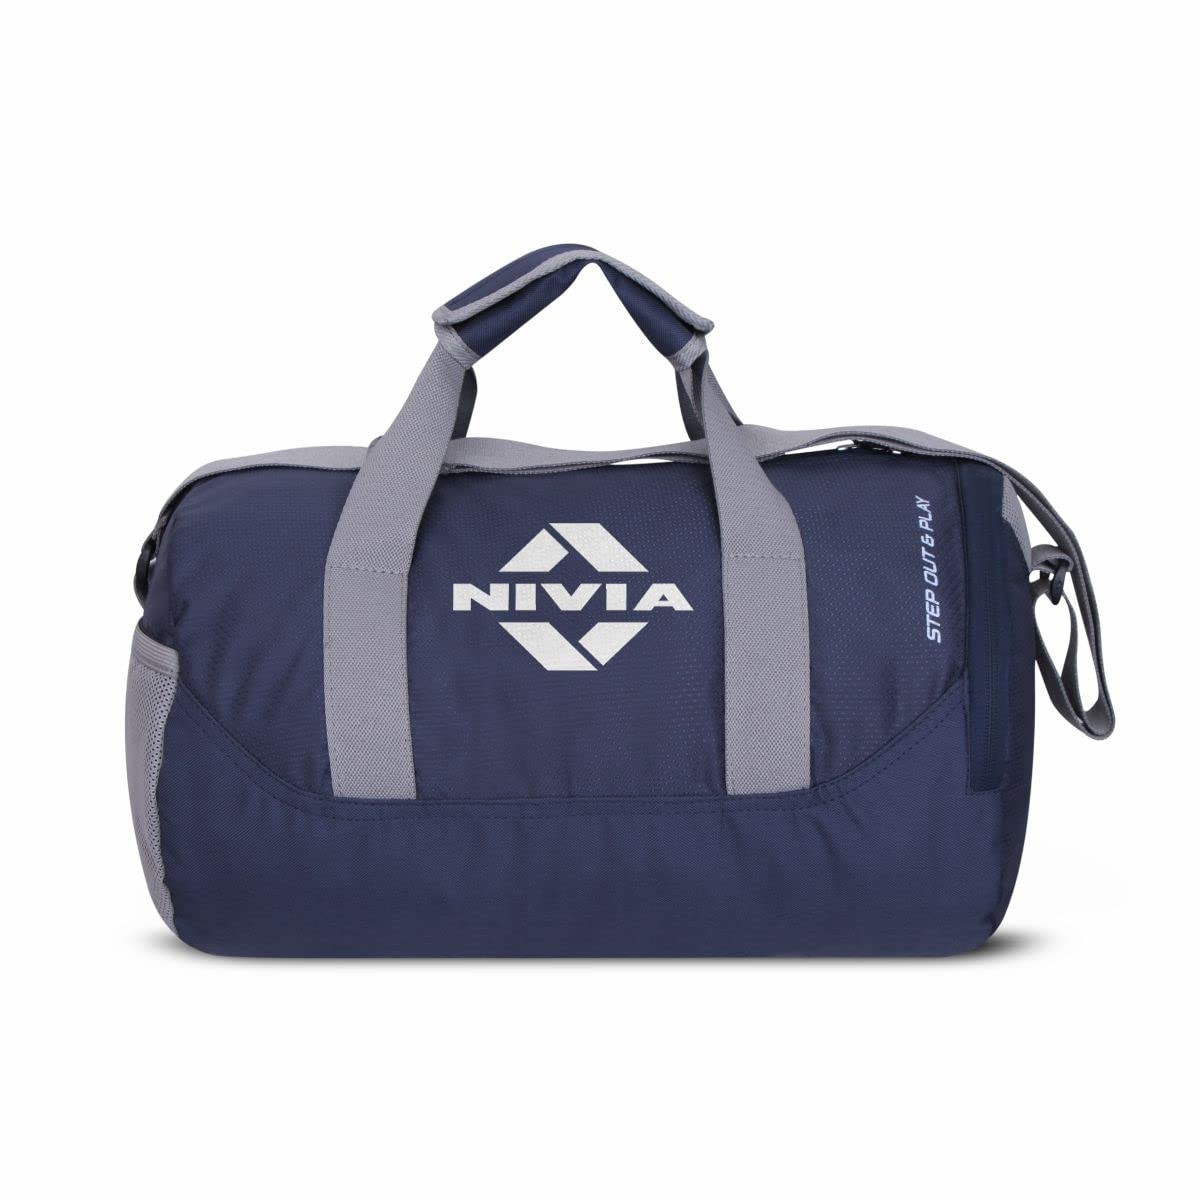 Bew stylish bag for youh😇😃 rs 800+$ | Stylish bag, Gift item, Stylish